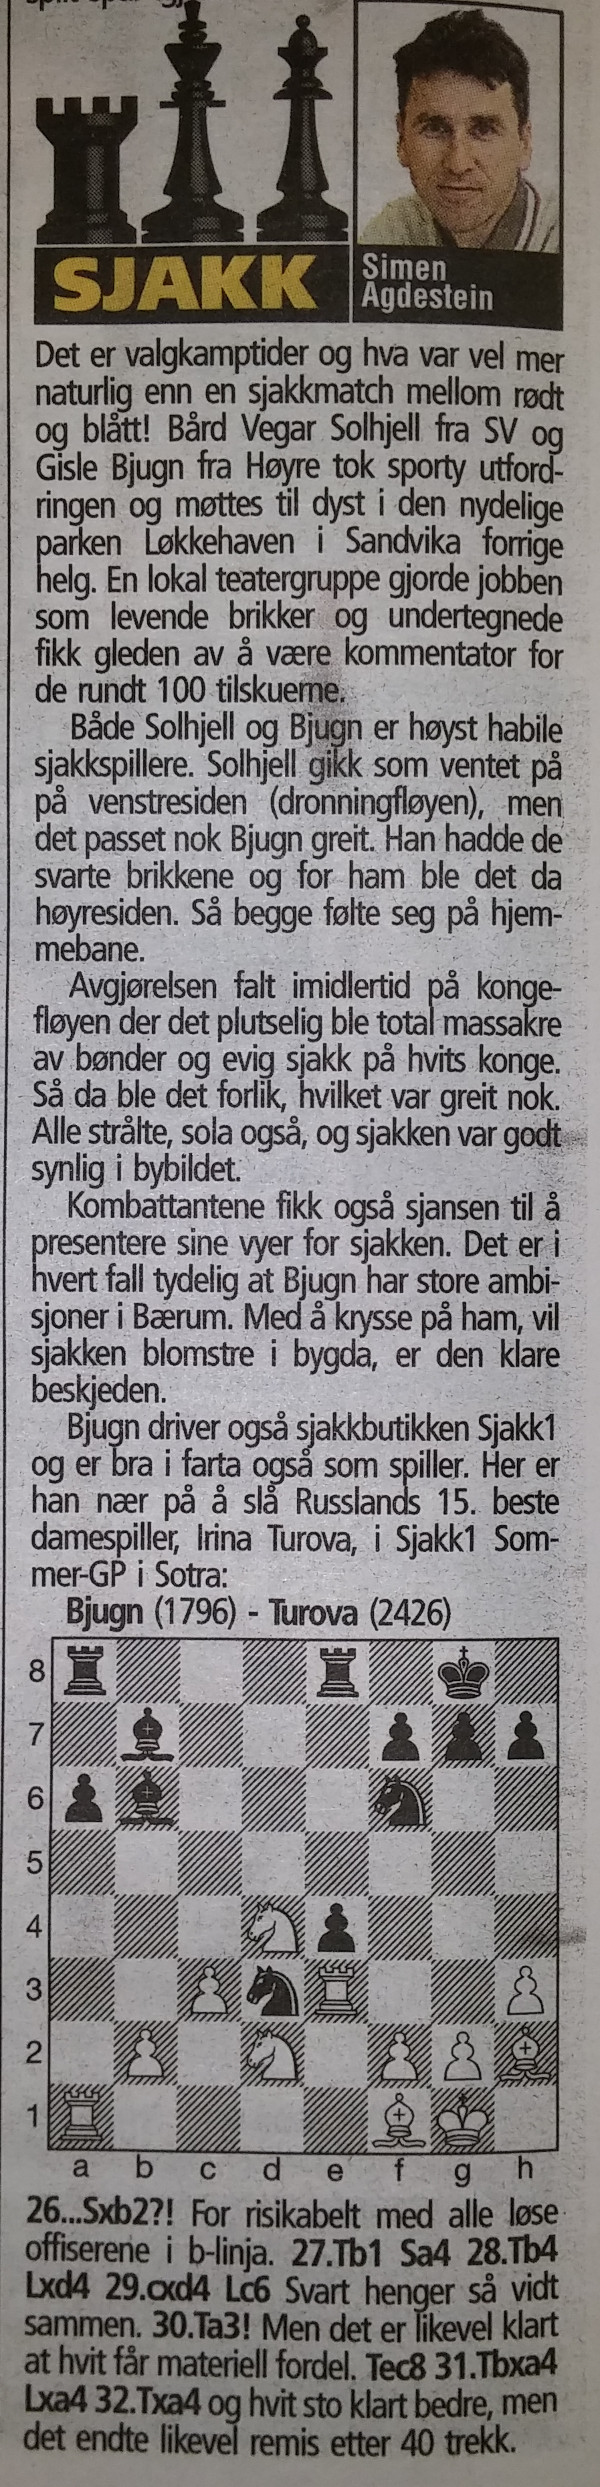 Simen Agdesteins sjakkspalte i VG 05.09.2015.